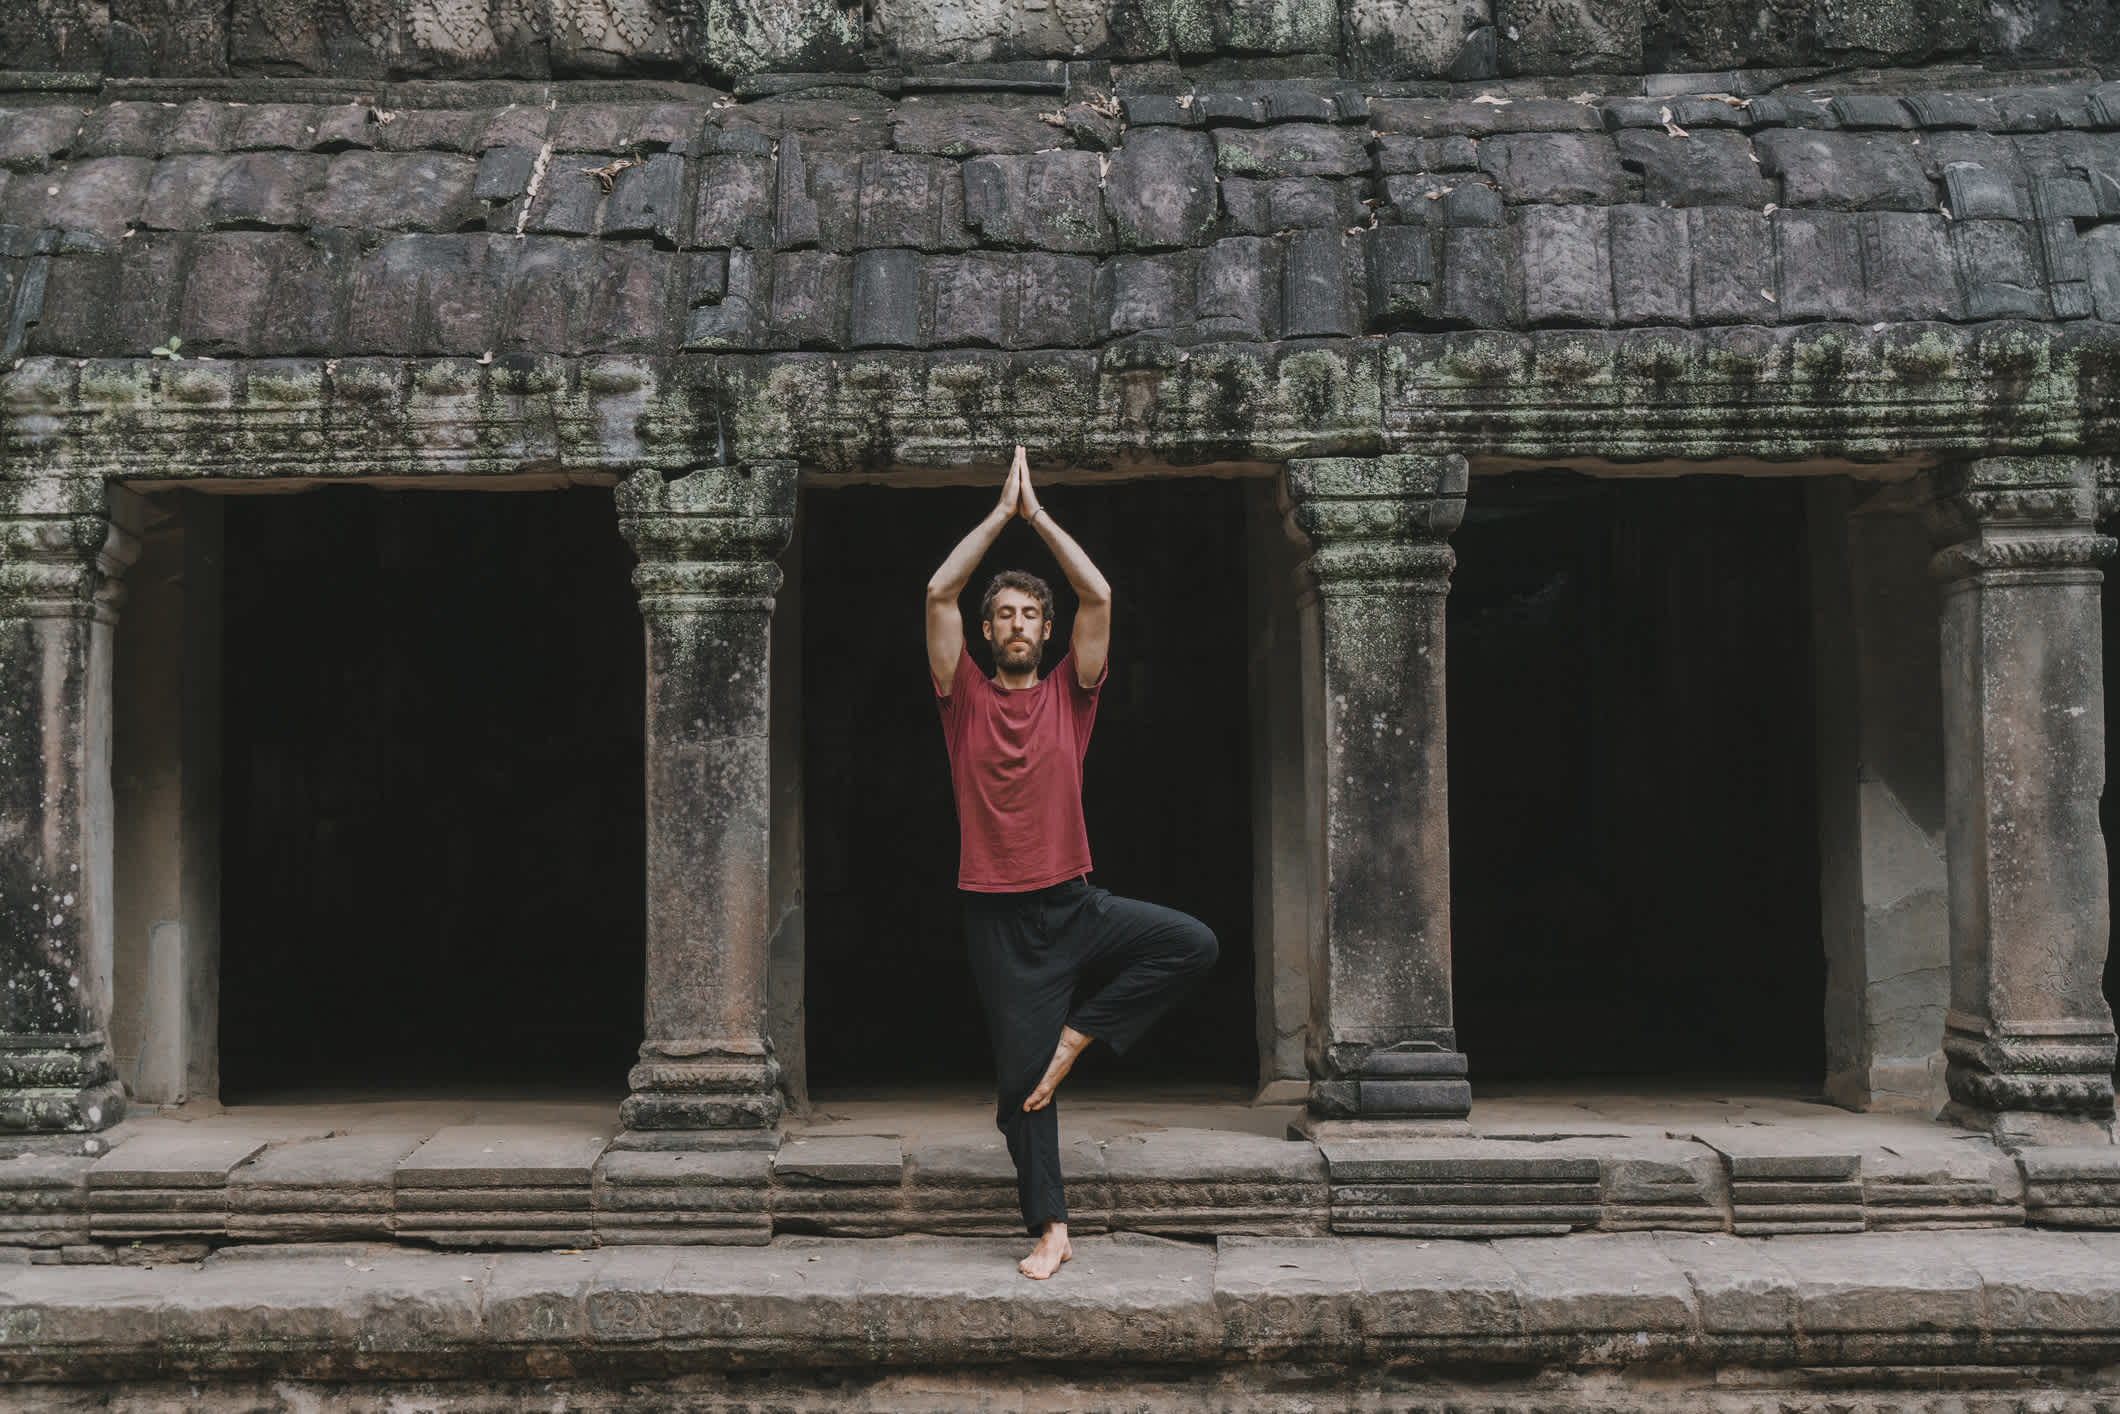 Mann tut Yoga im Tempel Angkor Wat, Kambodscha.